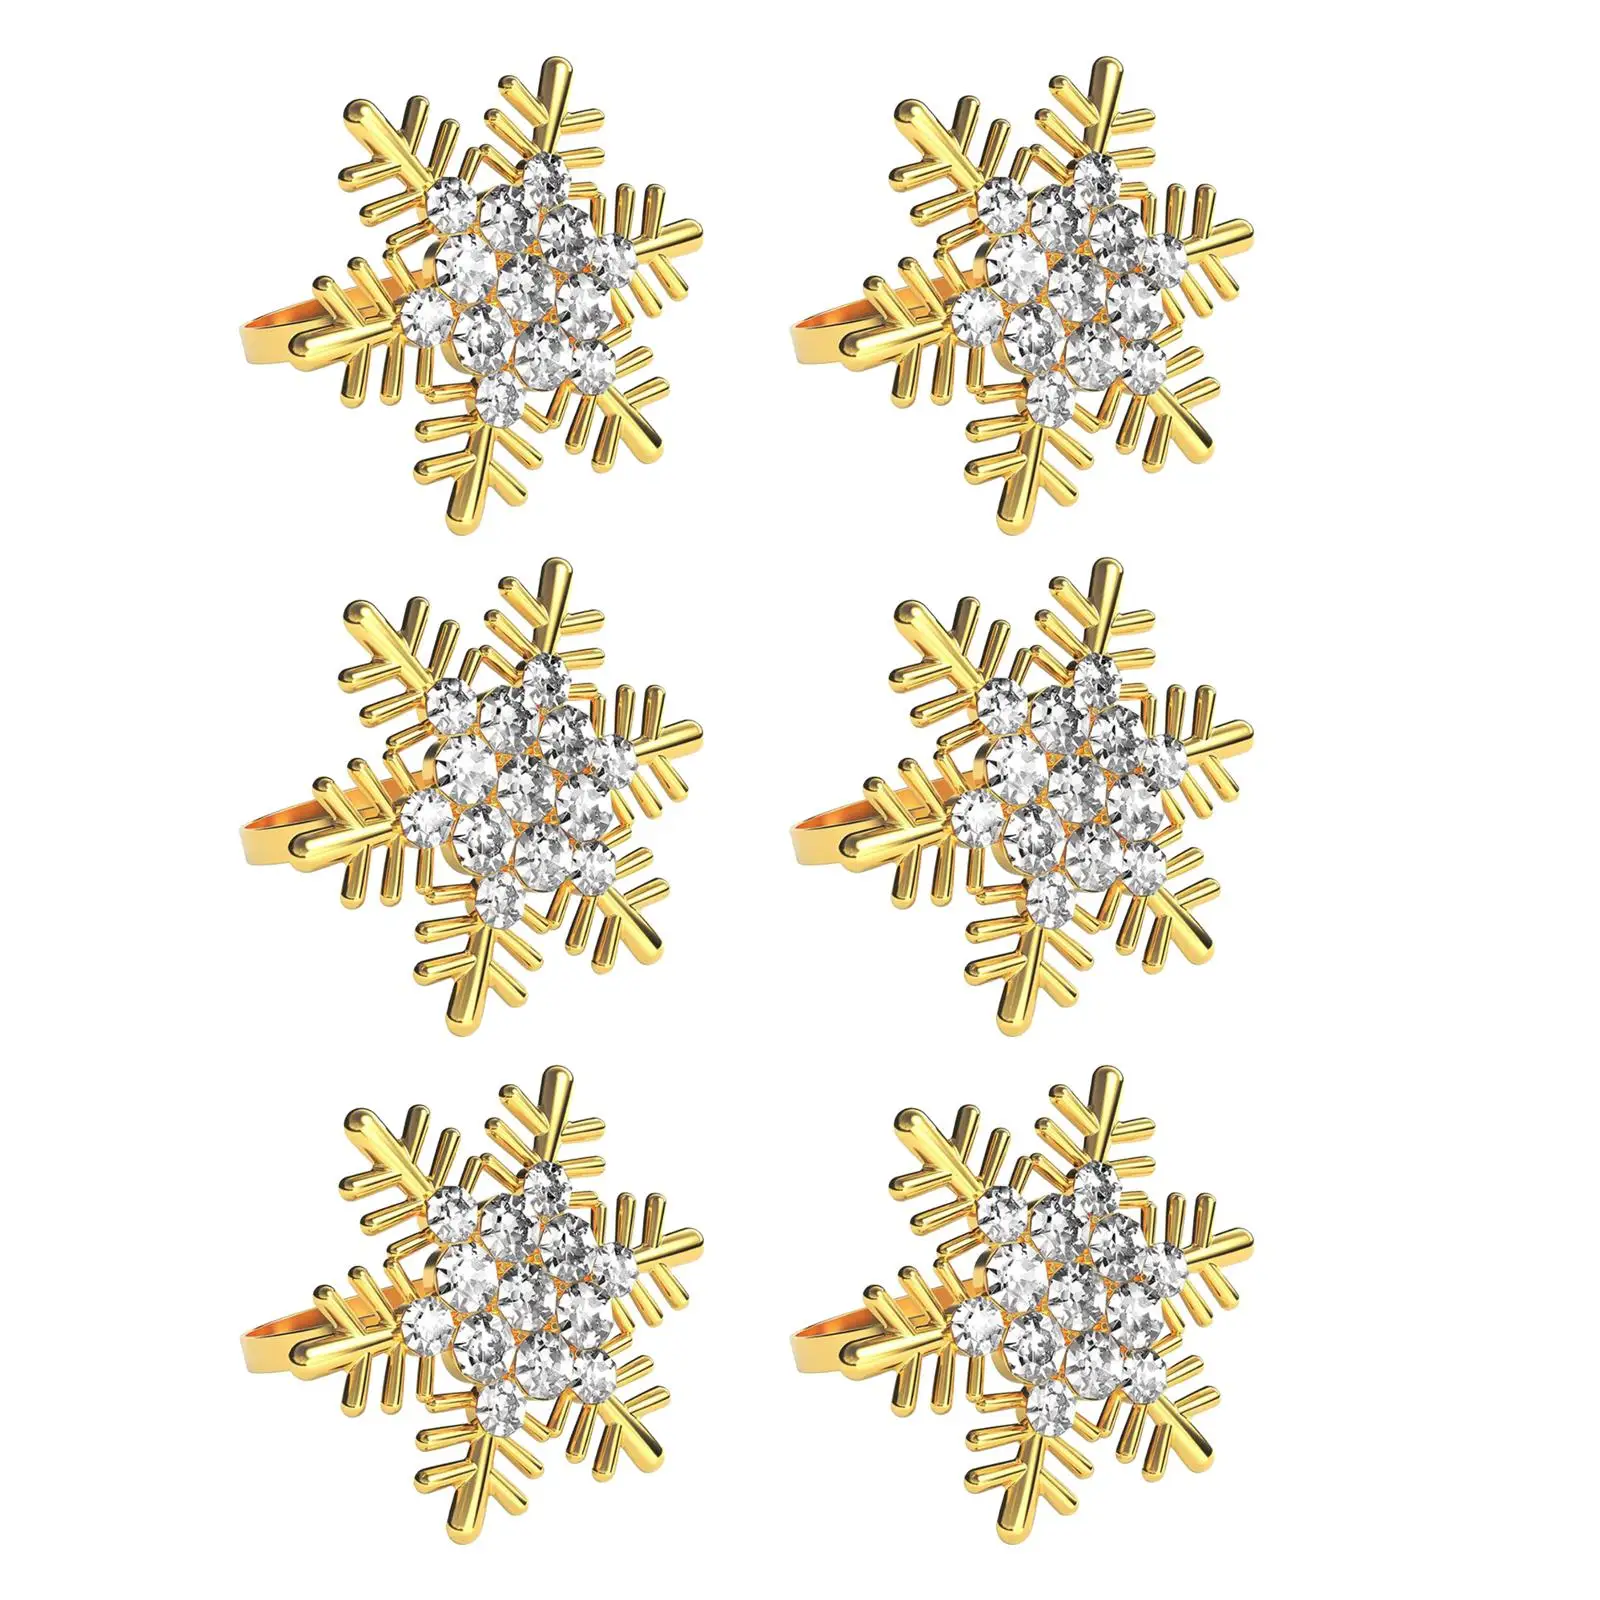 6 Pieces Snowflake Napkin Rings Household Metal Christmas Napkin Rings for Banquet Table Settings Christmas Wedding Decoration